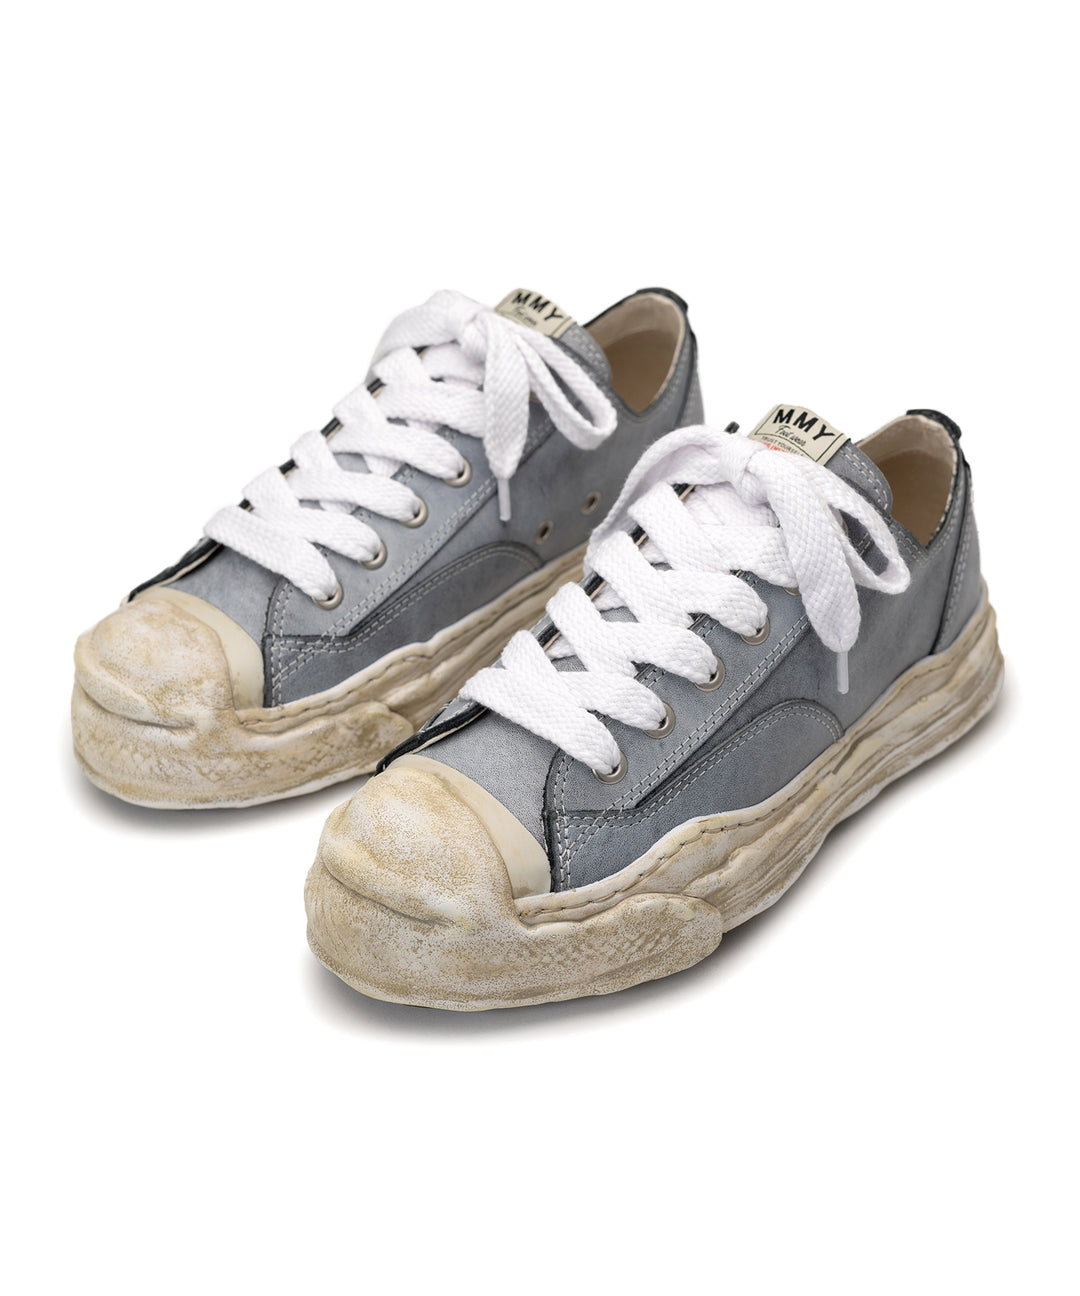 "HANK" OG Sole VL Leather Low-top Sneaker